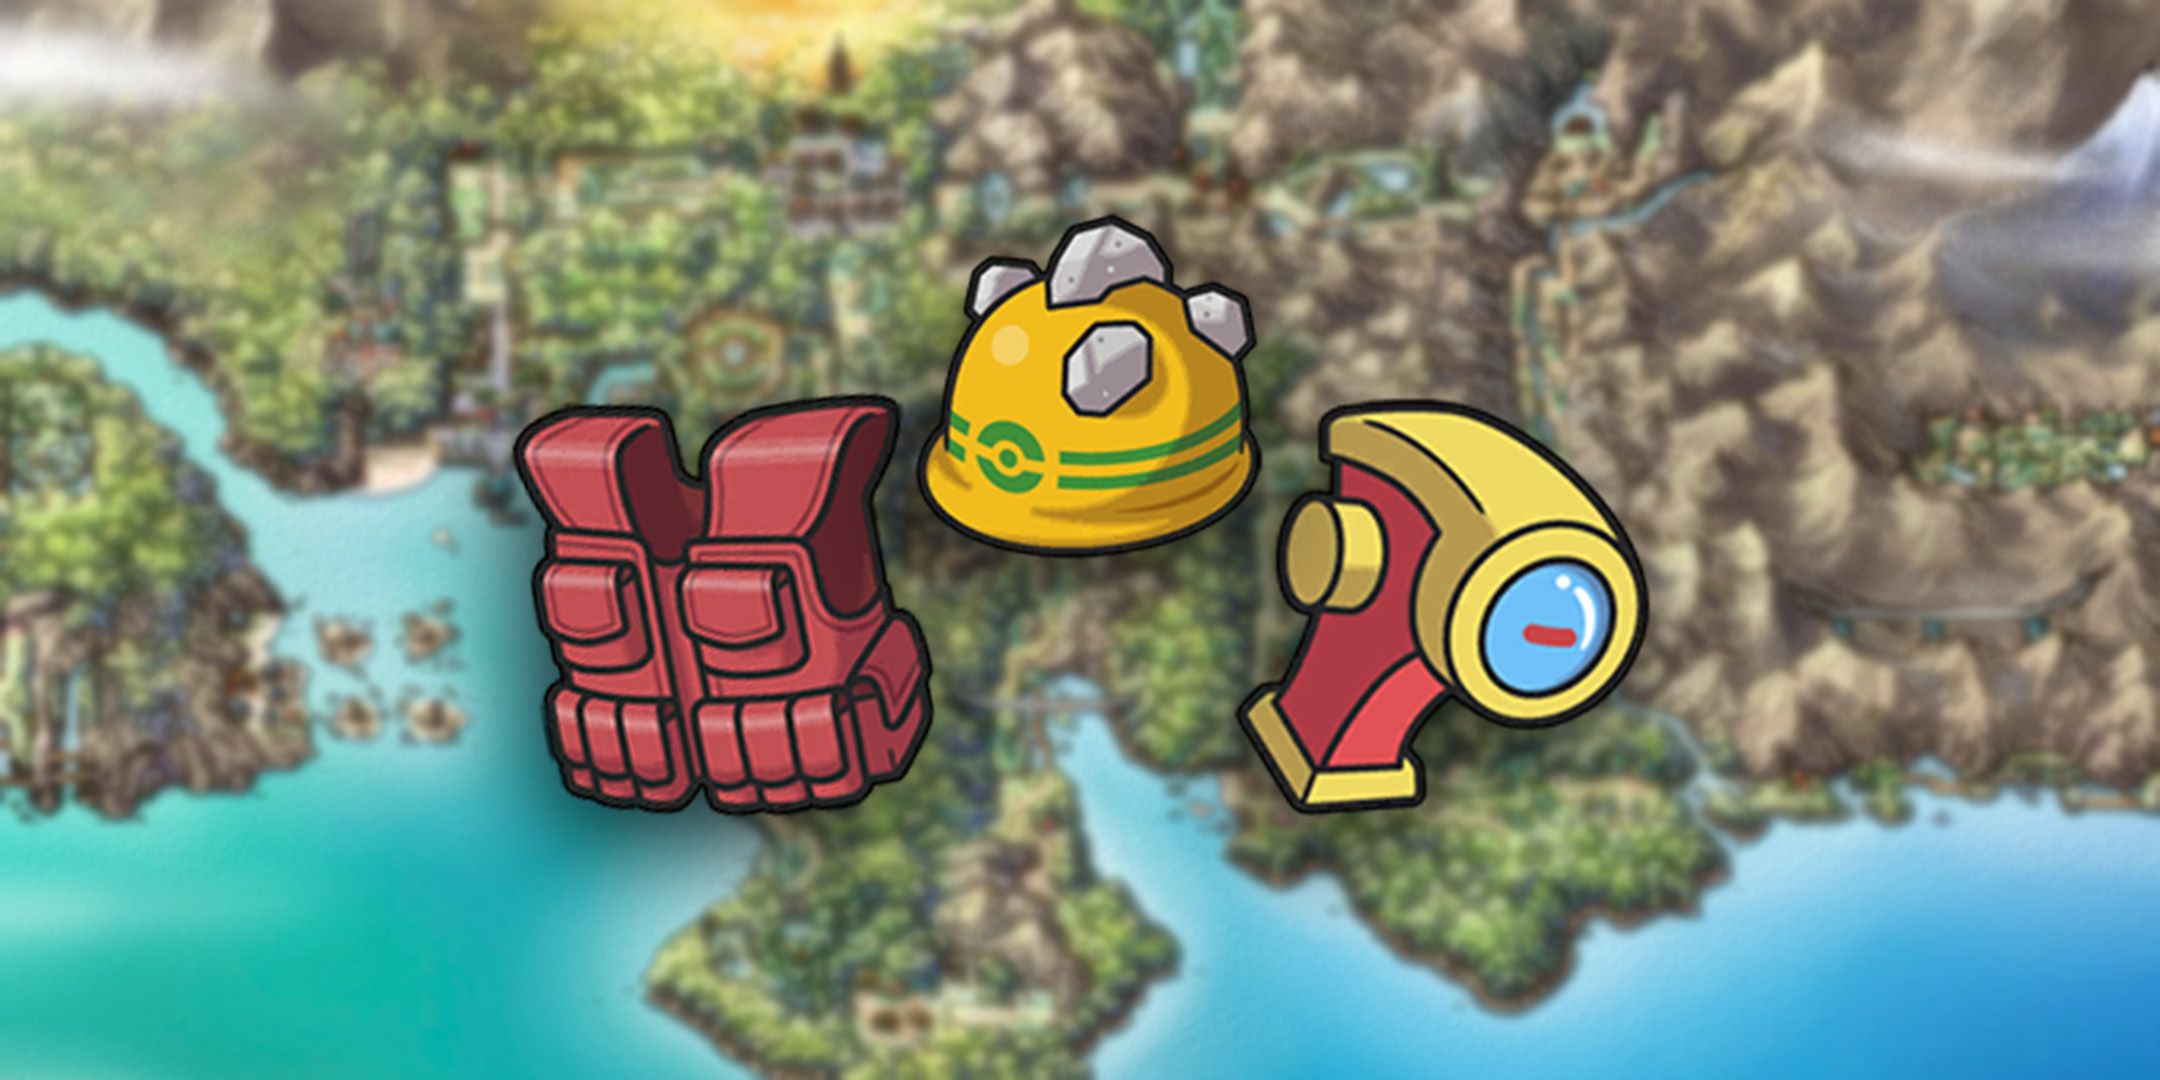 The Assault Vest, Rocky Helmet, and Zoom Lens in front of the Johto Pokemon Region